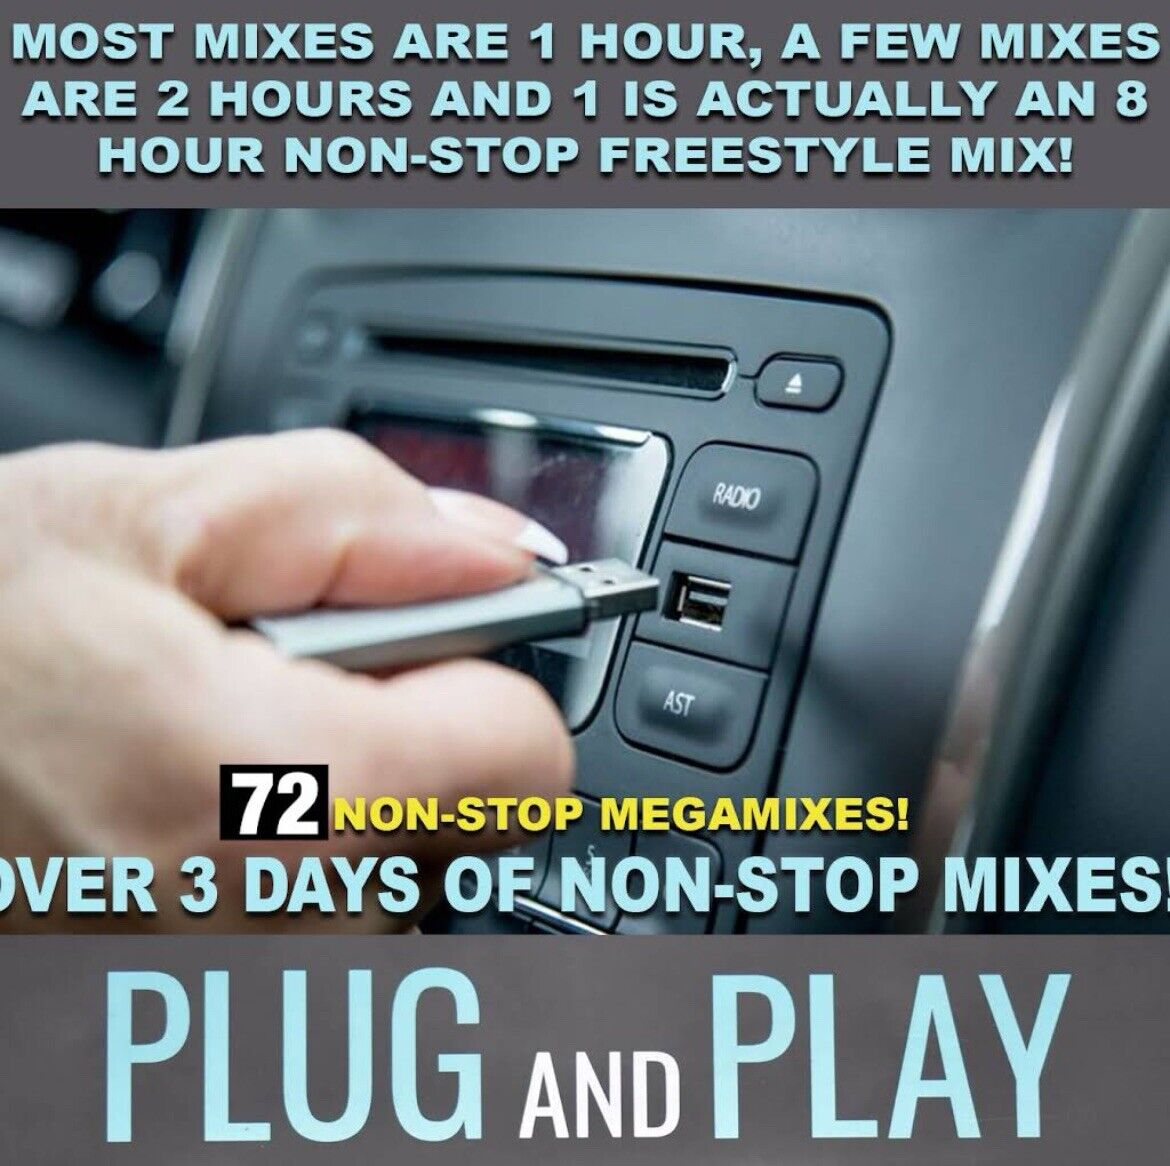 DJ DESTINY MEGAMIXES - OVER 72 MIXES ON USB